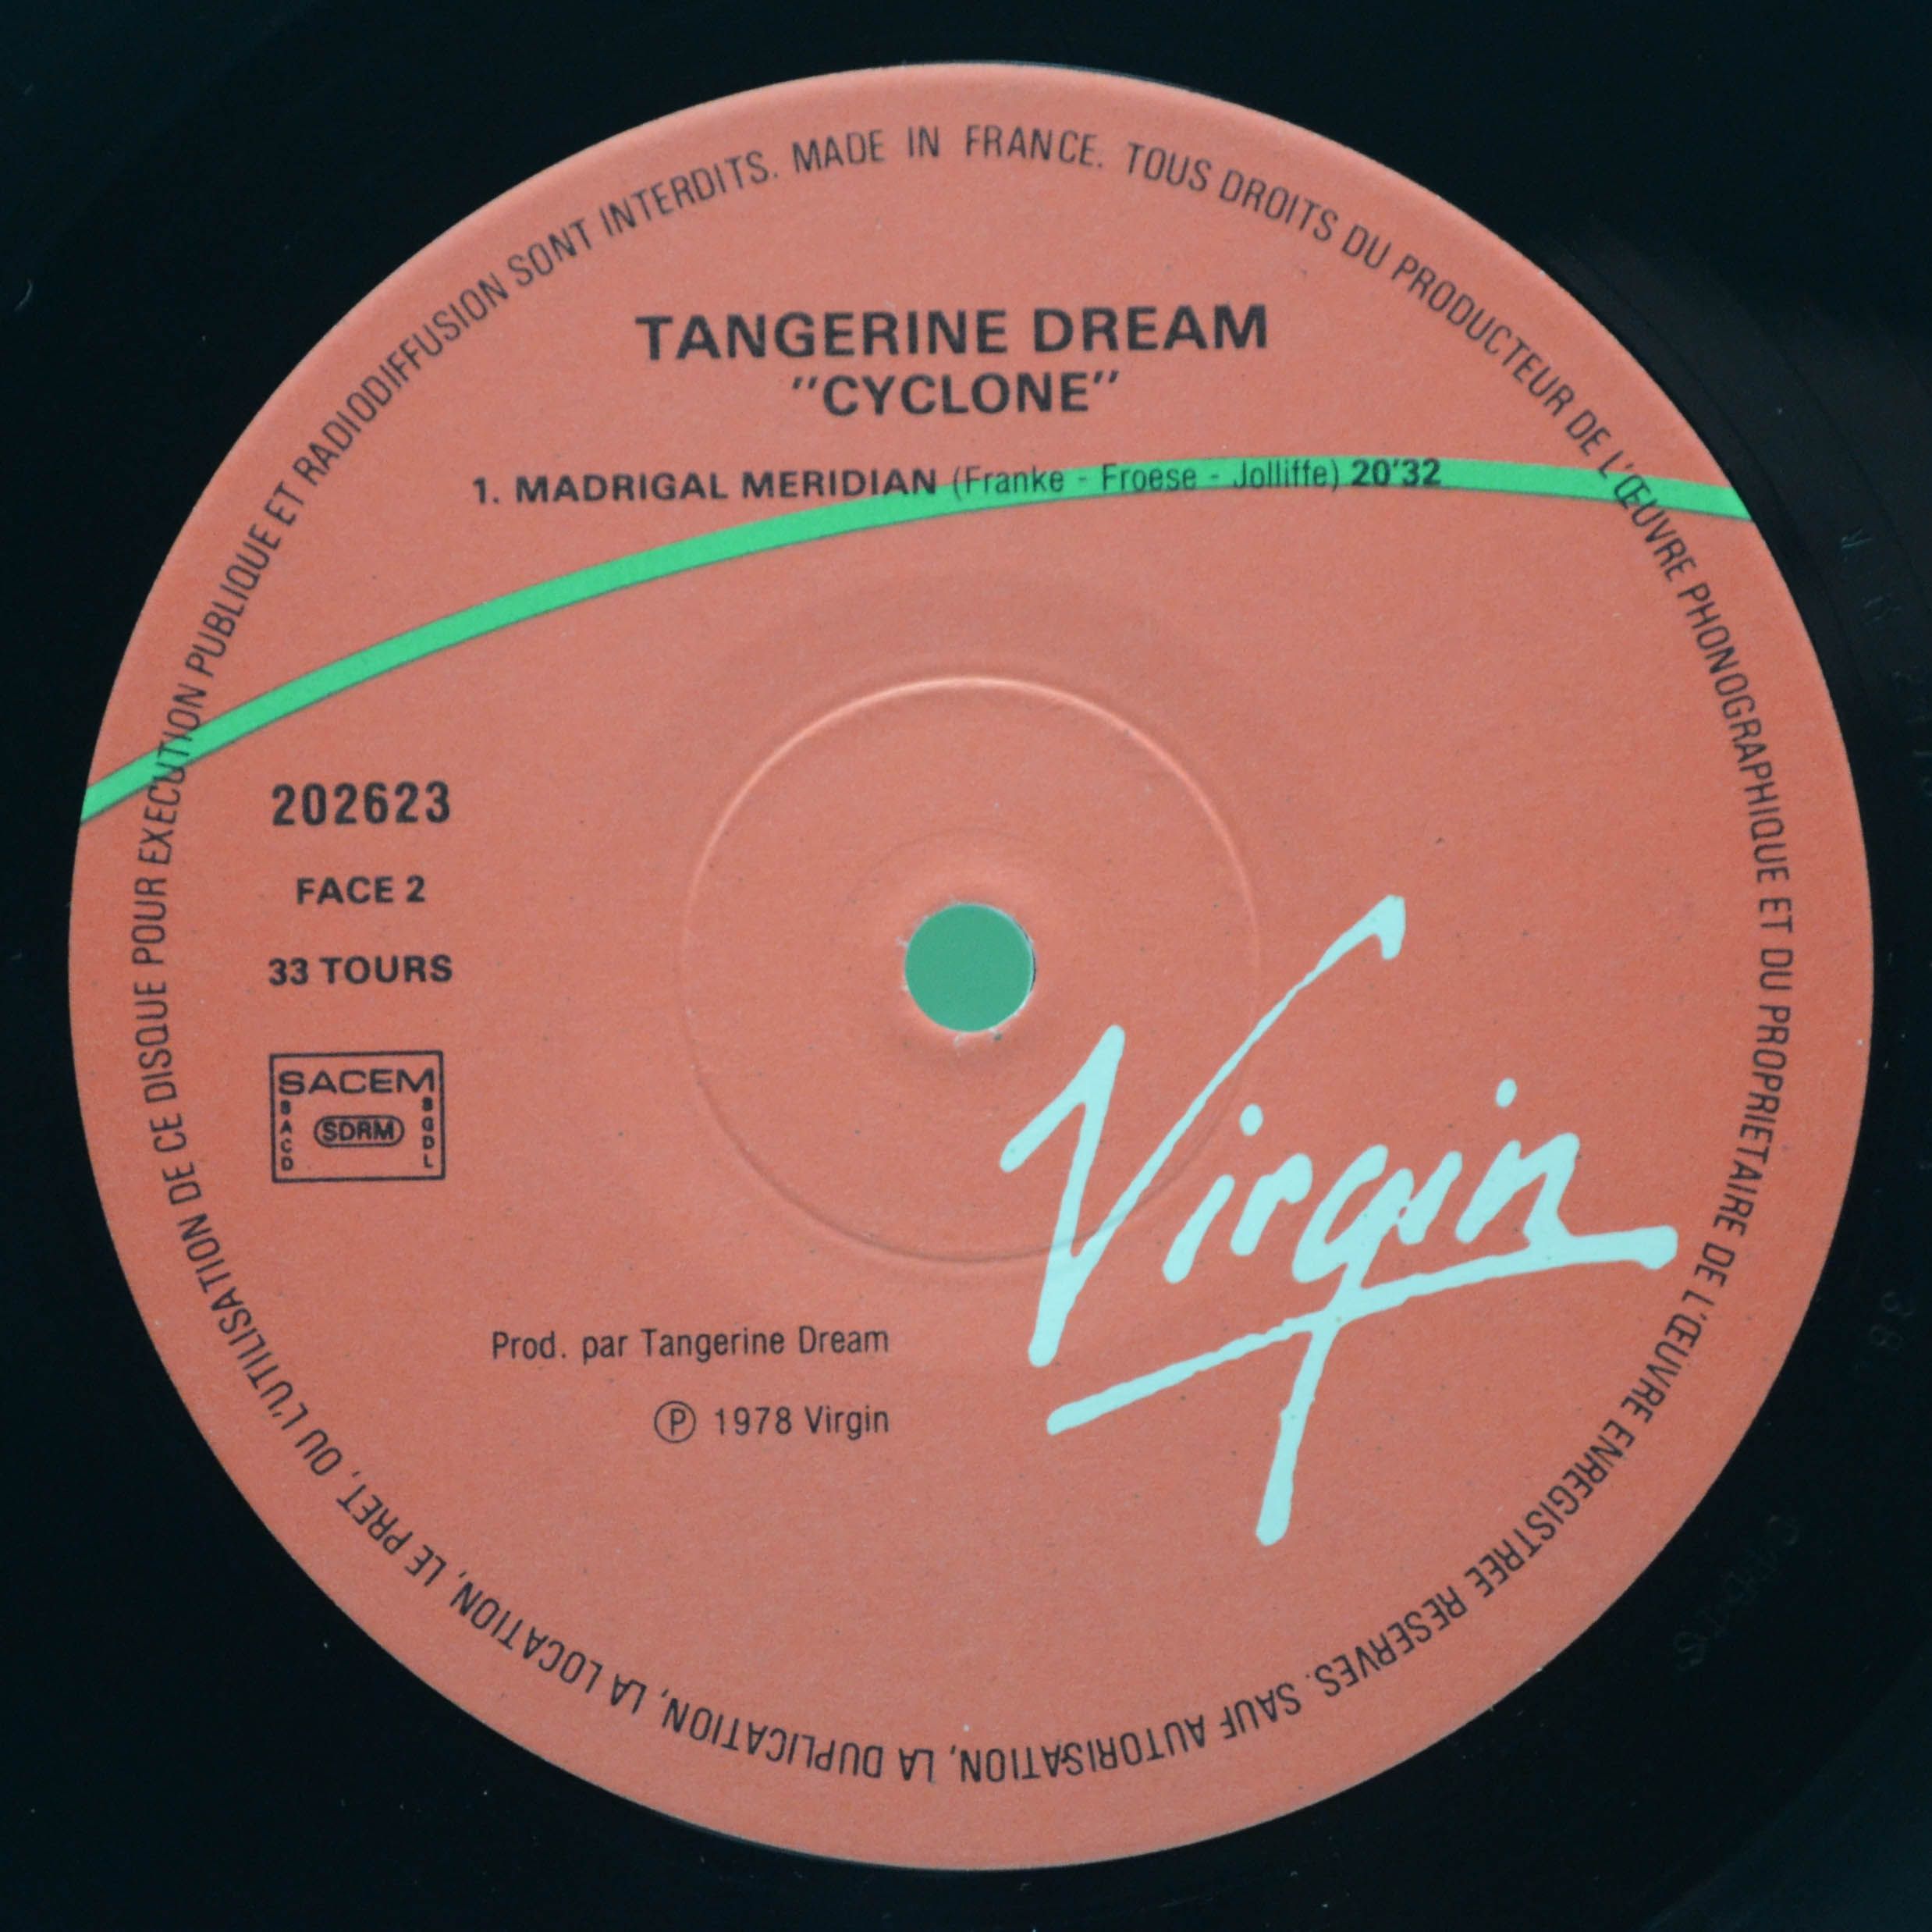 Tangerine Dream — Cyclone, 1983